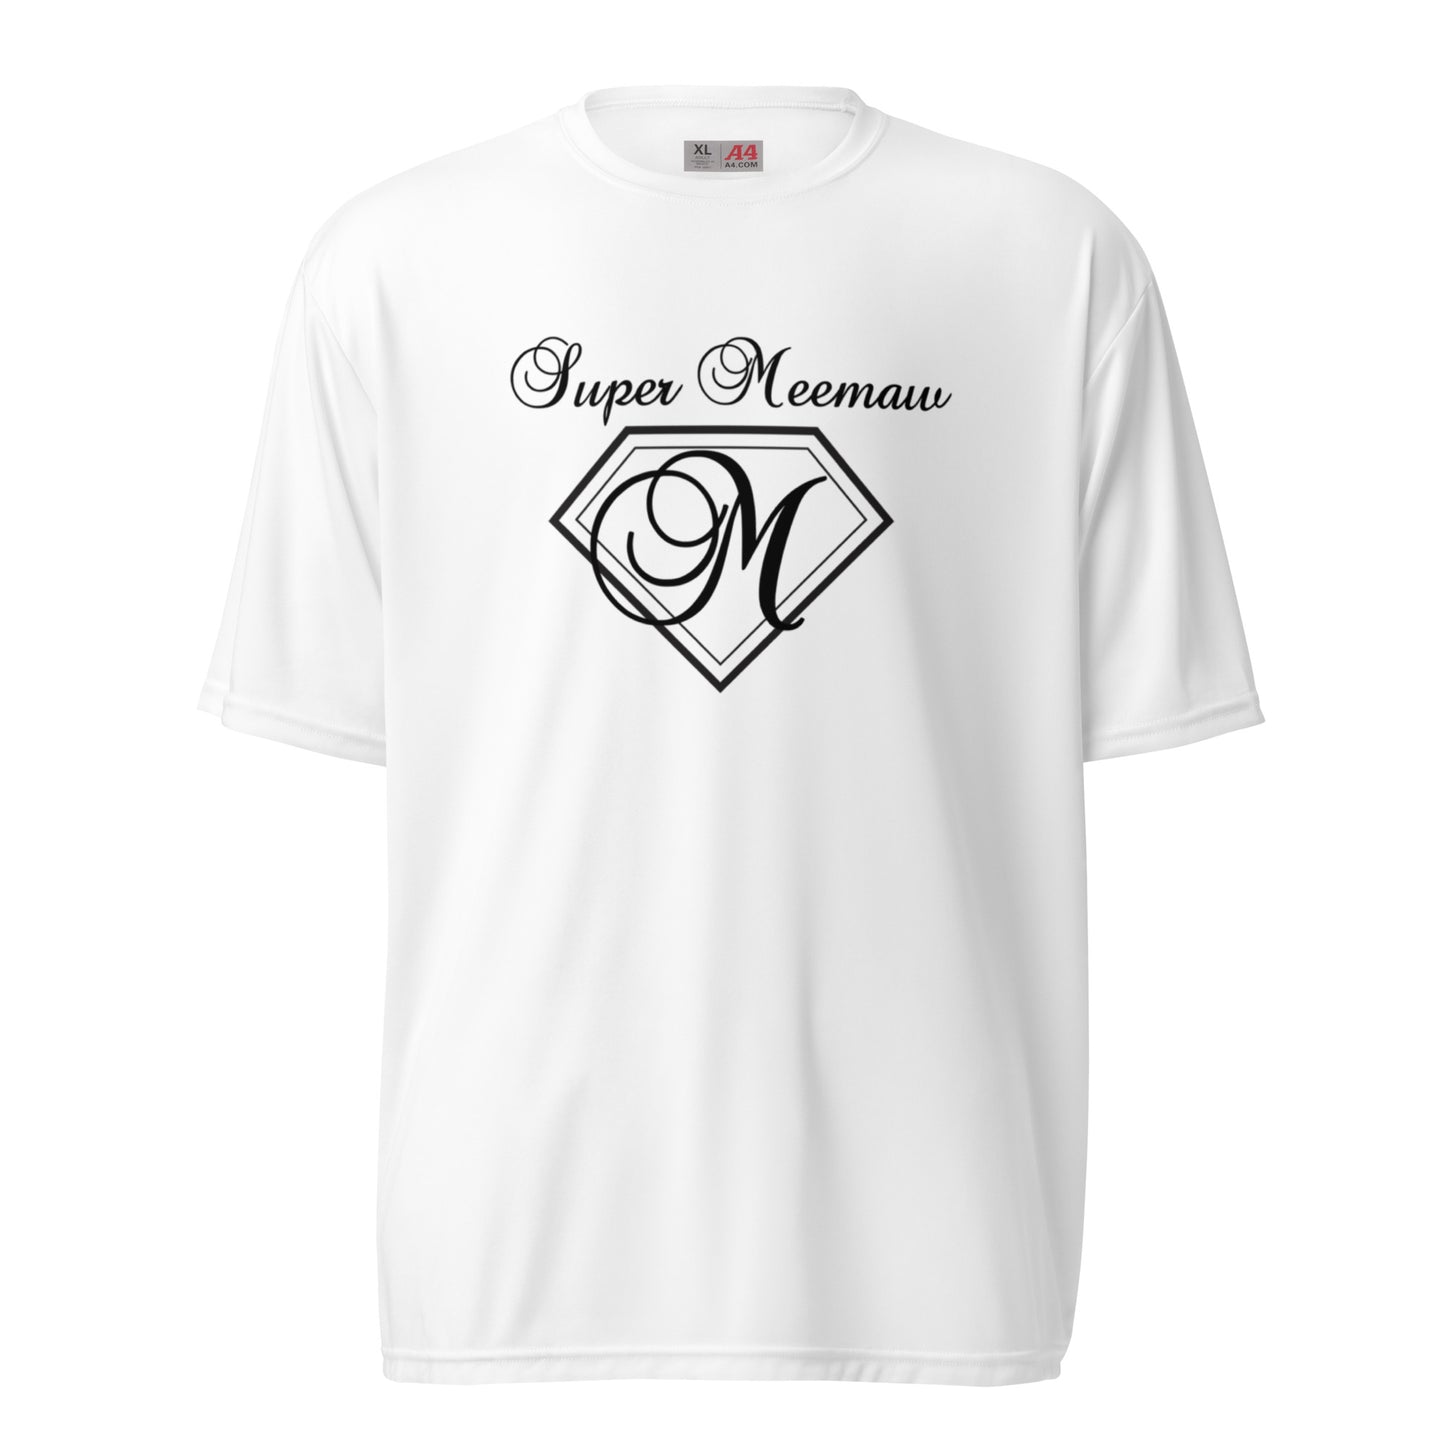 Super Meemaw unisex performance crew neck t-shirt - Black Print